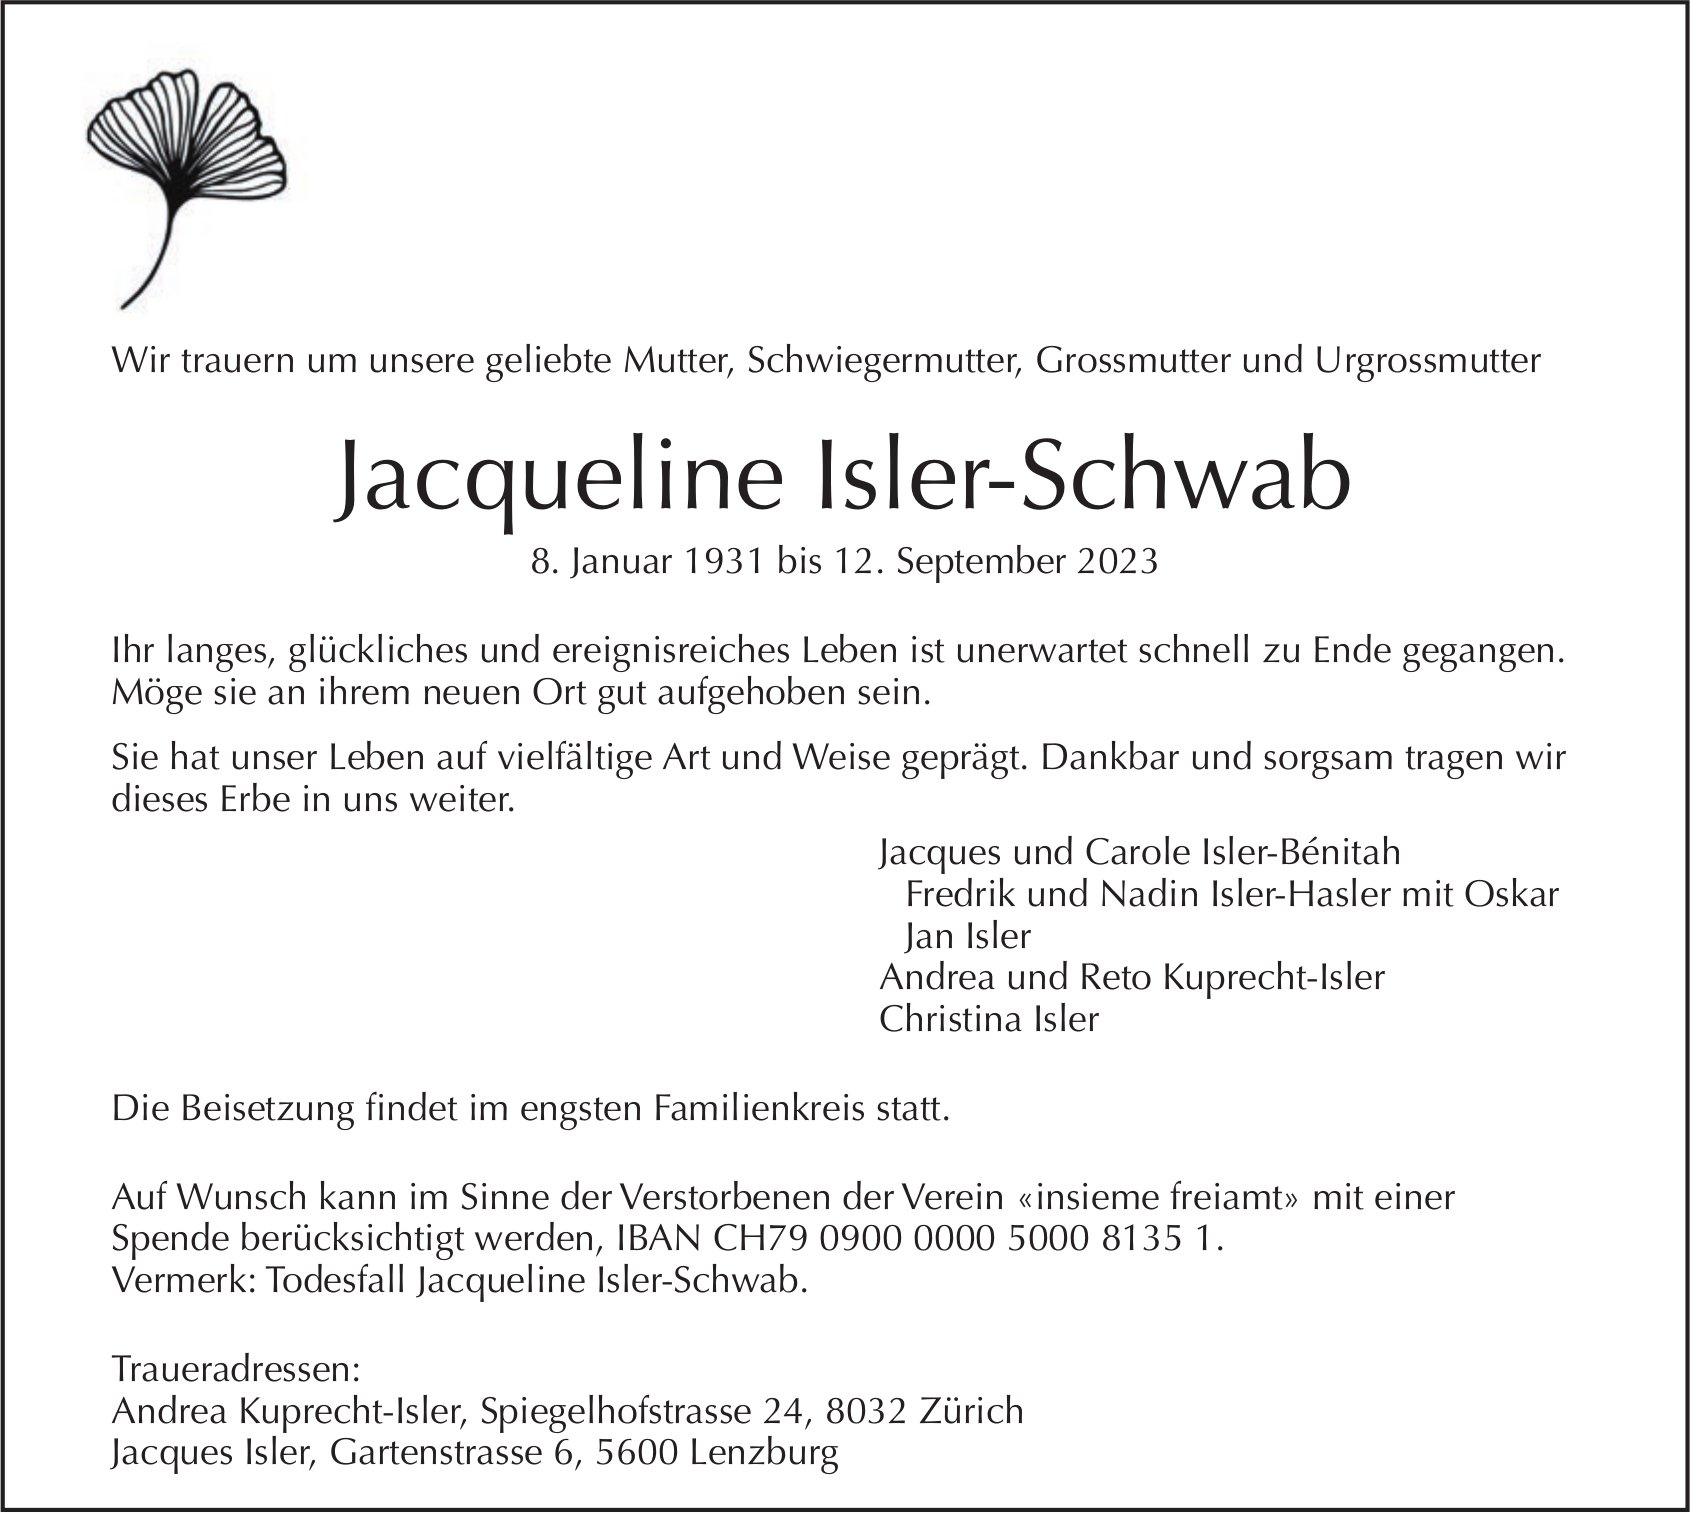 Jacqueline Isler-Schwab, September 2023 / TA